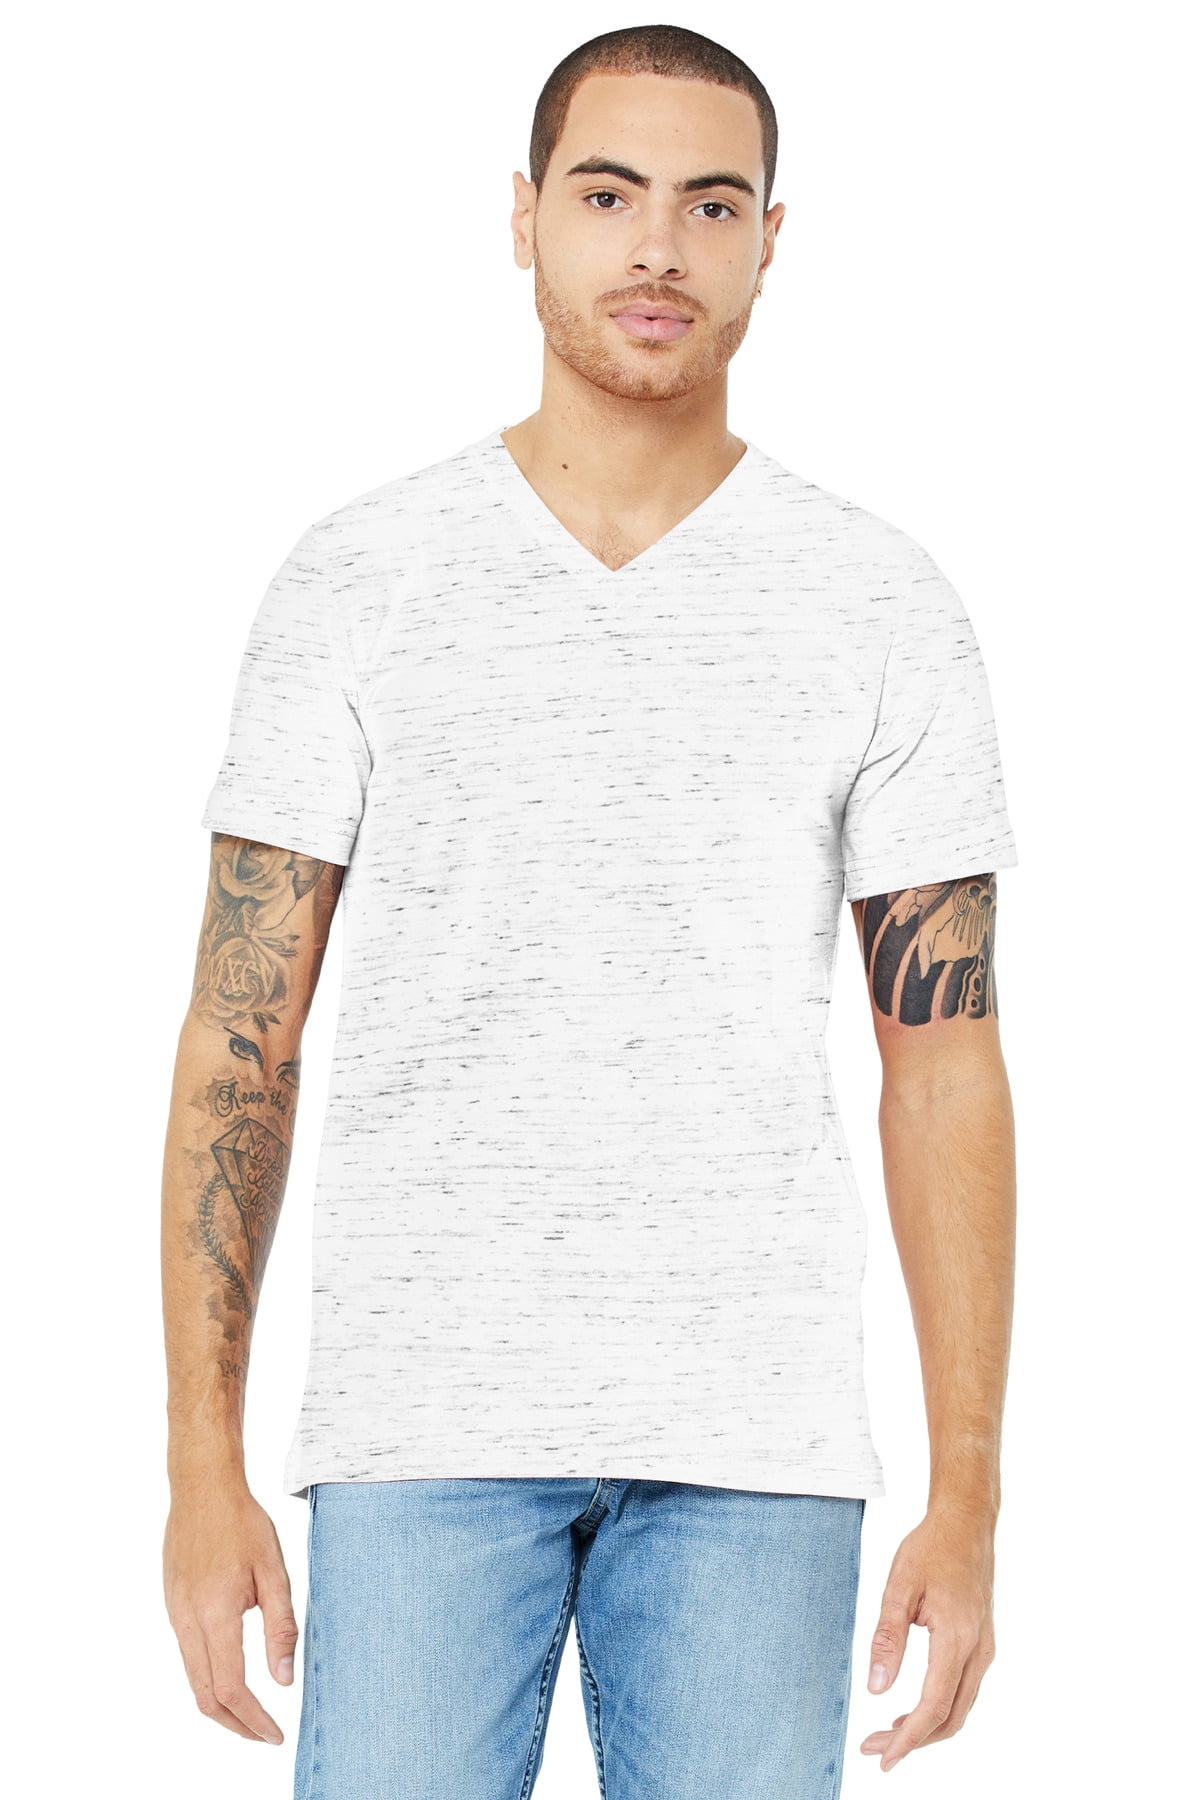 Unisex Jersey Short-Sleeve V-Neck T-Shirt - WHITE MARBLE - M